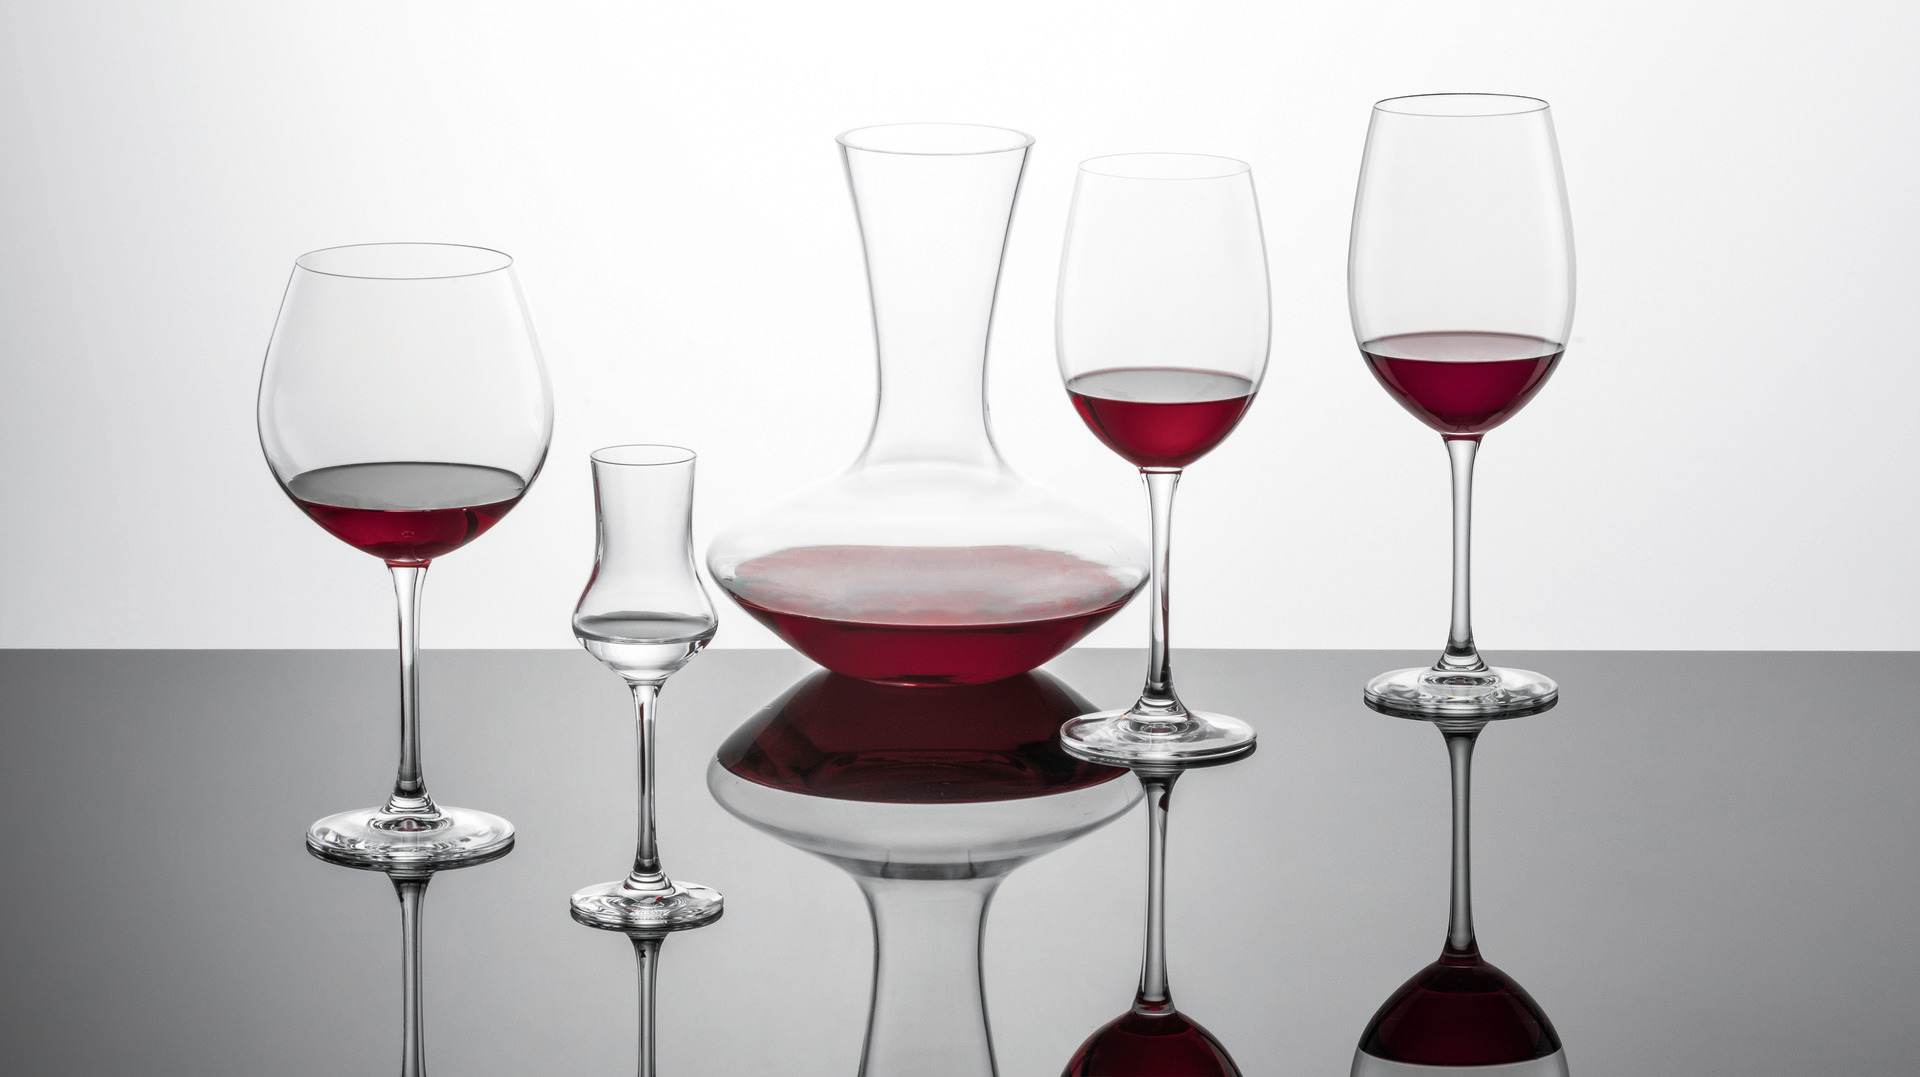 Wasser- / Rotweinglas 90 mm / 0,55 l 0,25 /-/